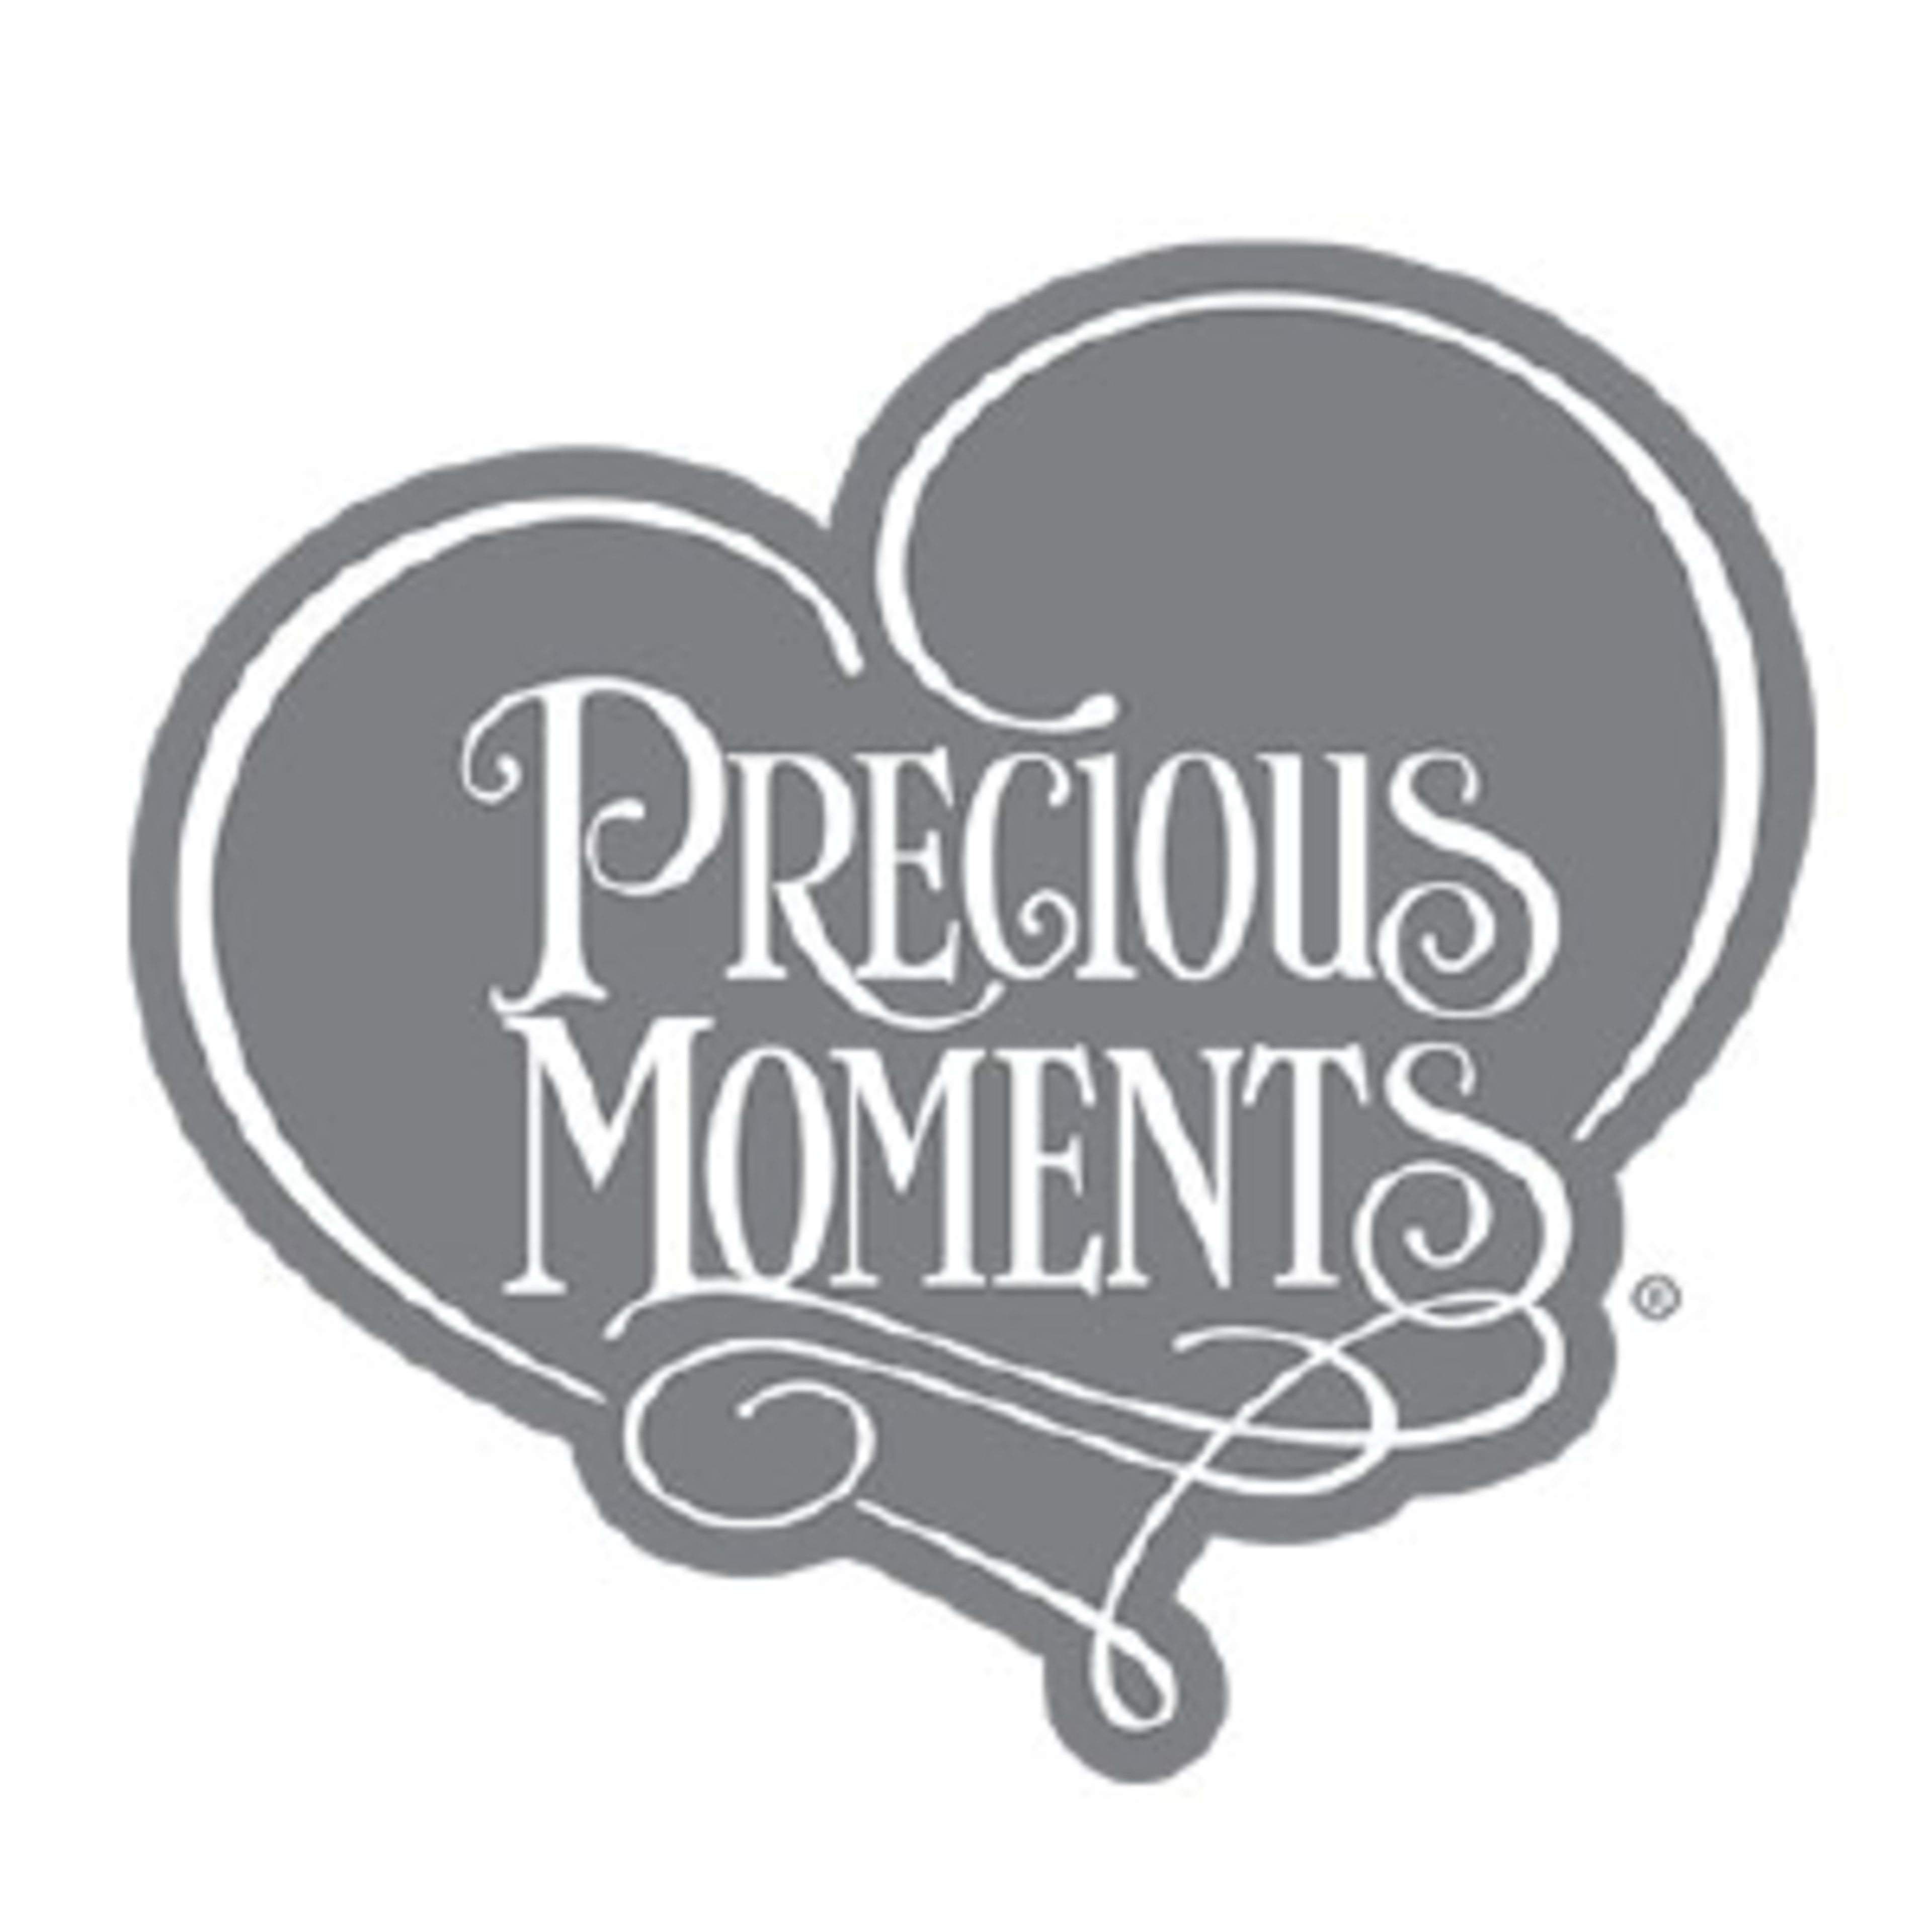 Precious MomentsCode